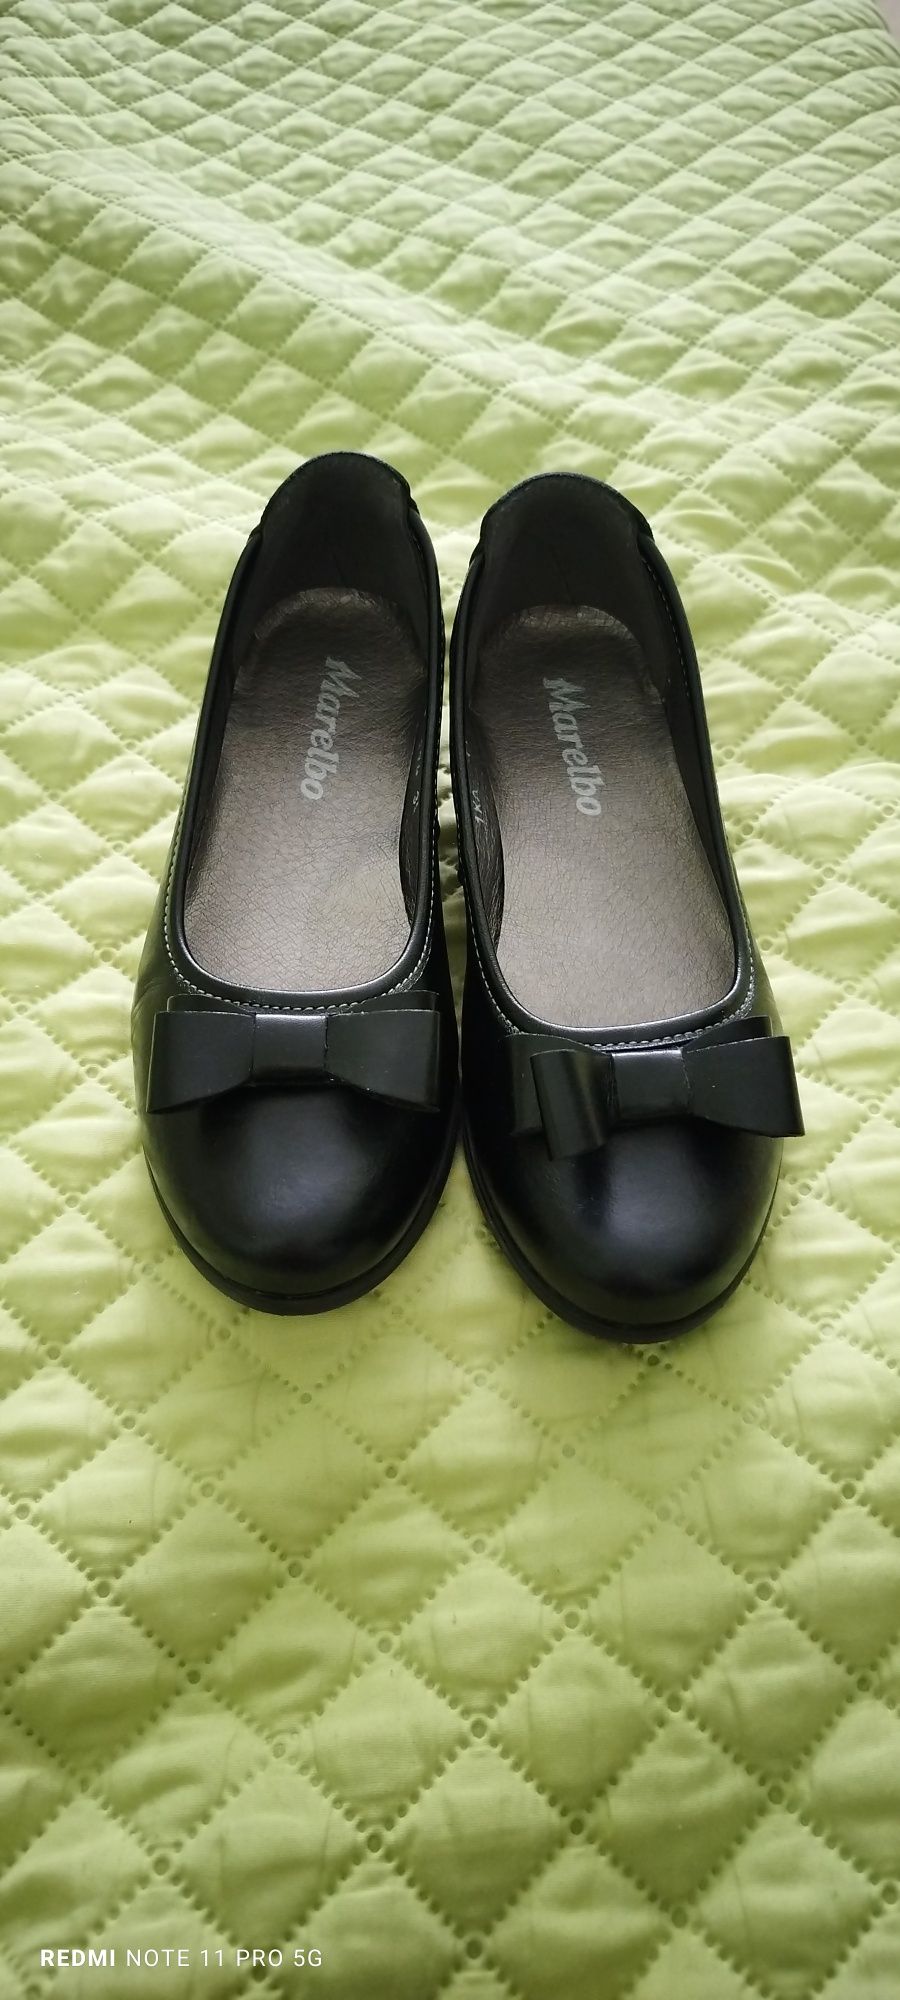 Pantofi fete, negri, marca Marelbo, piele naturala, marimea 35.